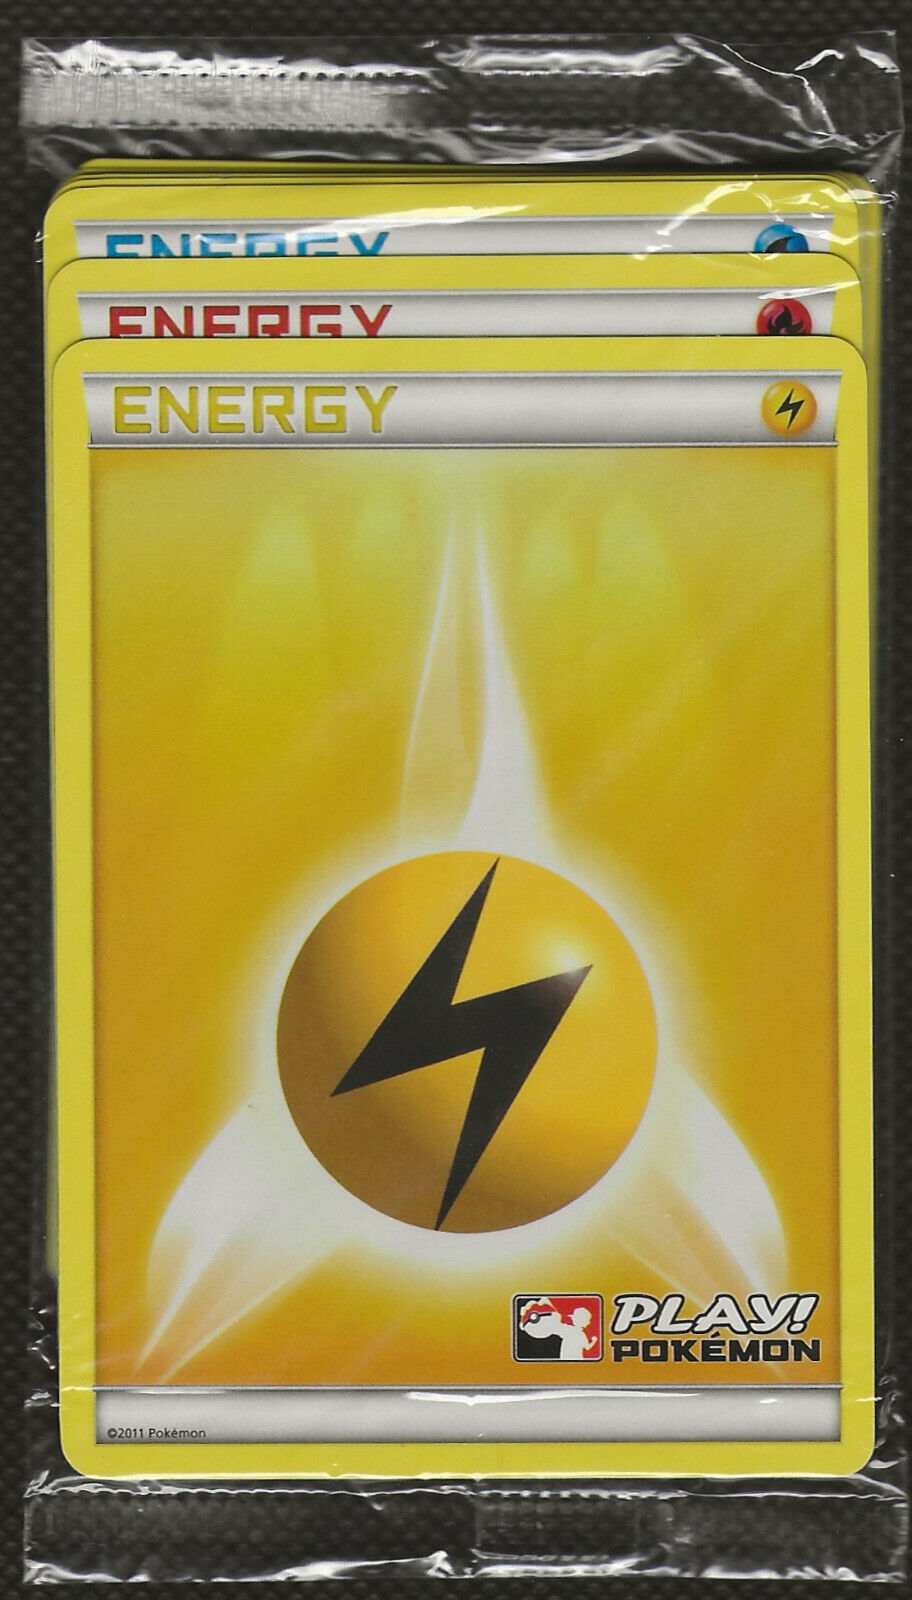 2011 Pokemon ENERGY Card Play League Set Holo 8pcs Lighting Fire Water Sealed 